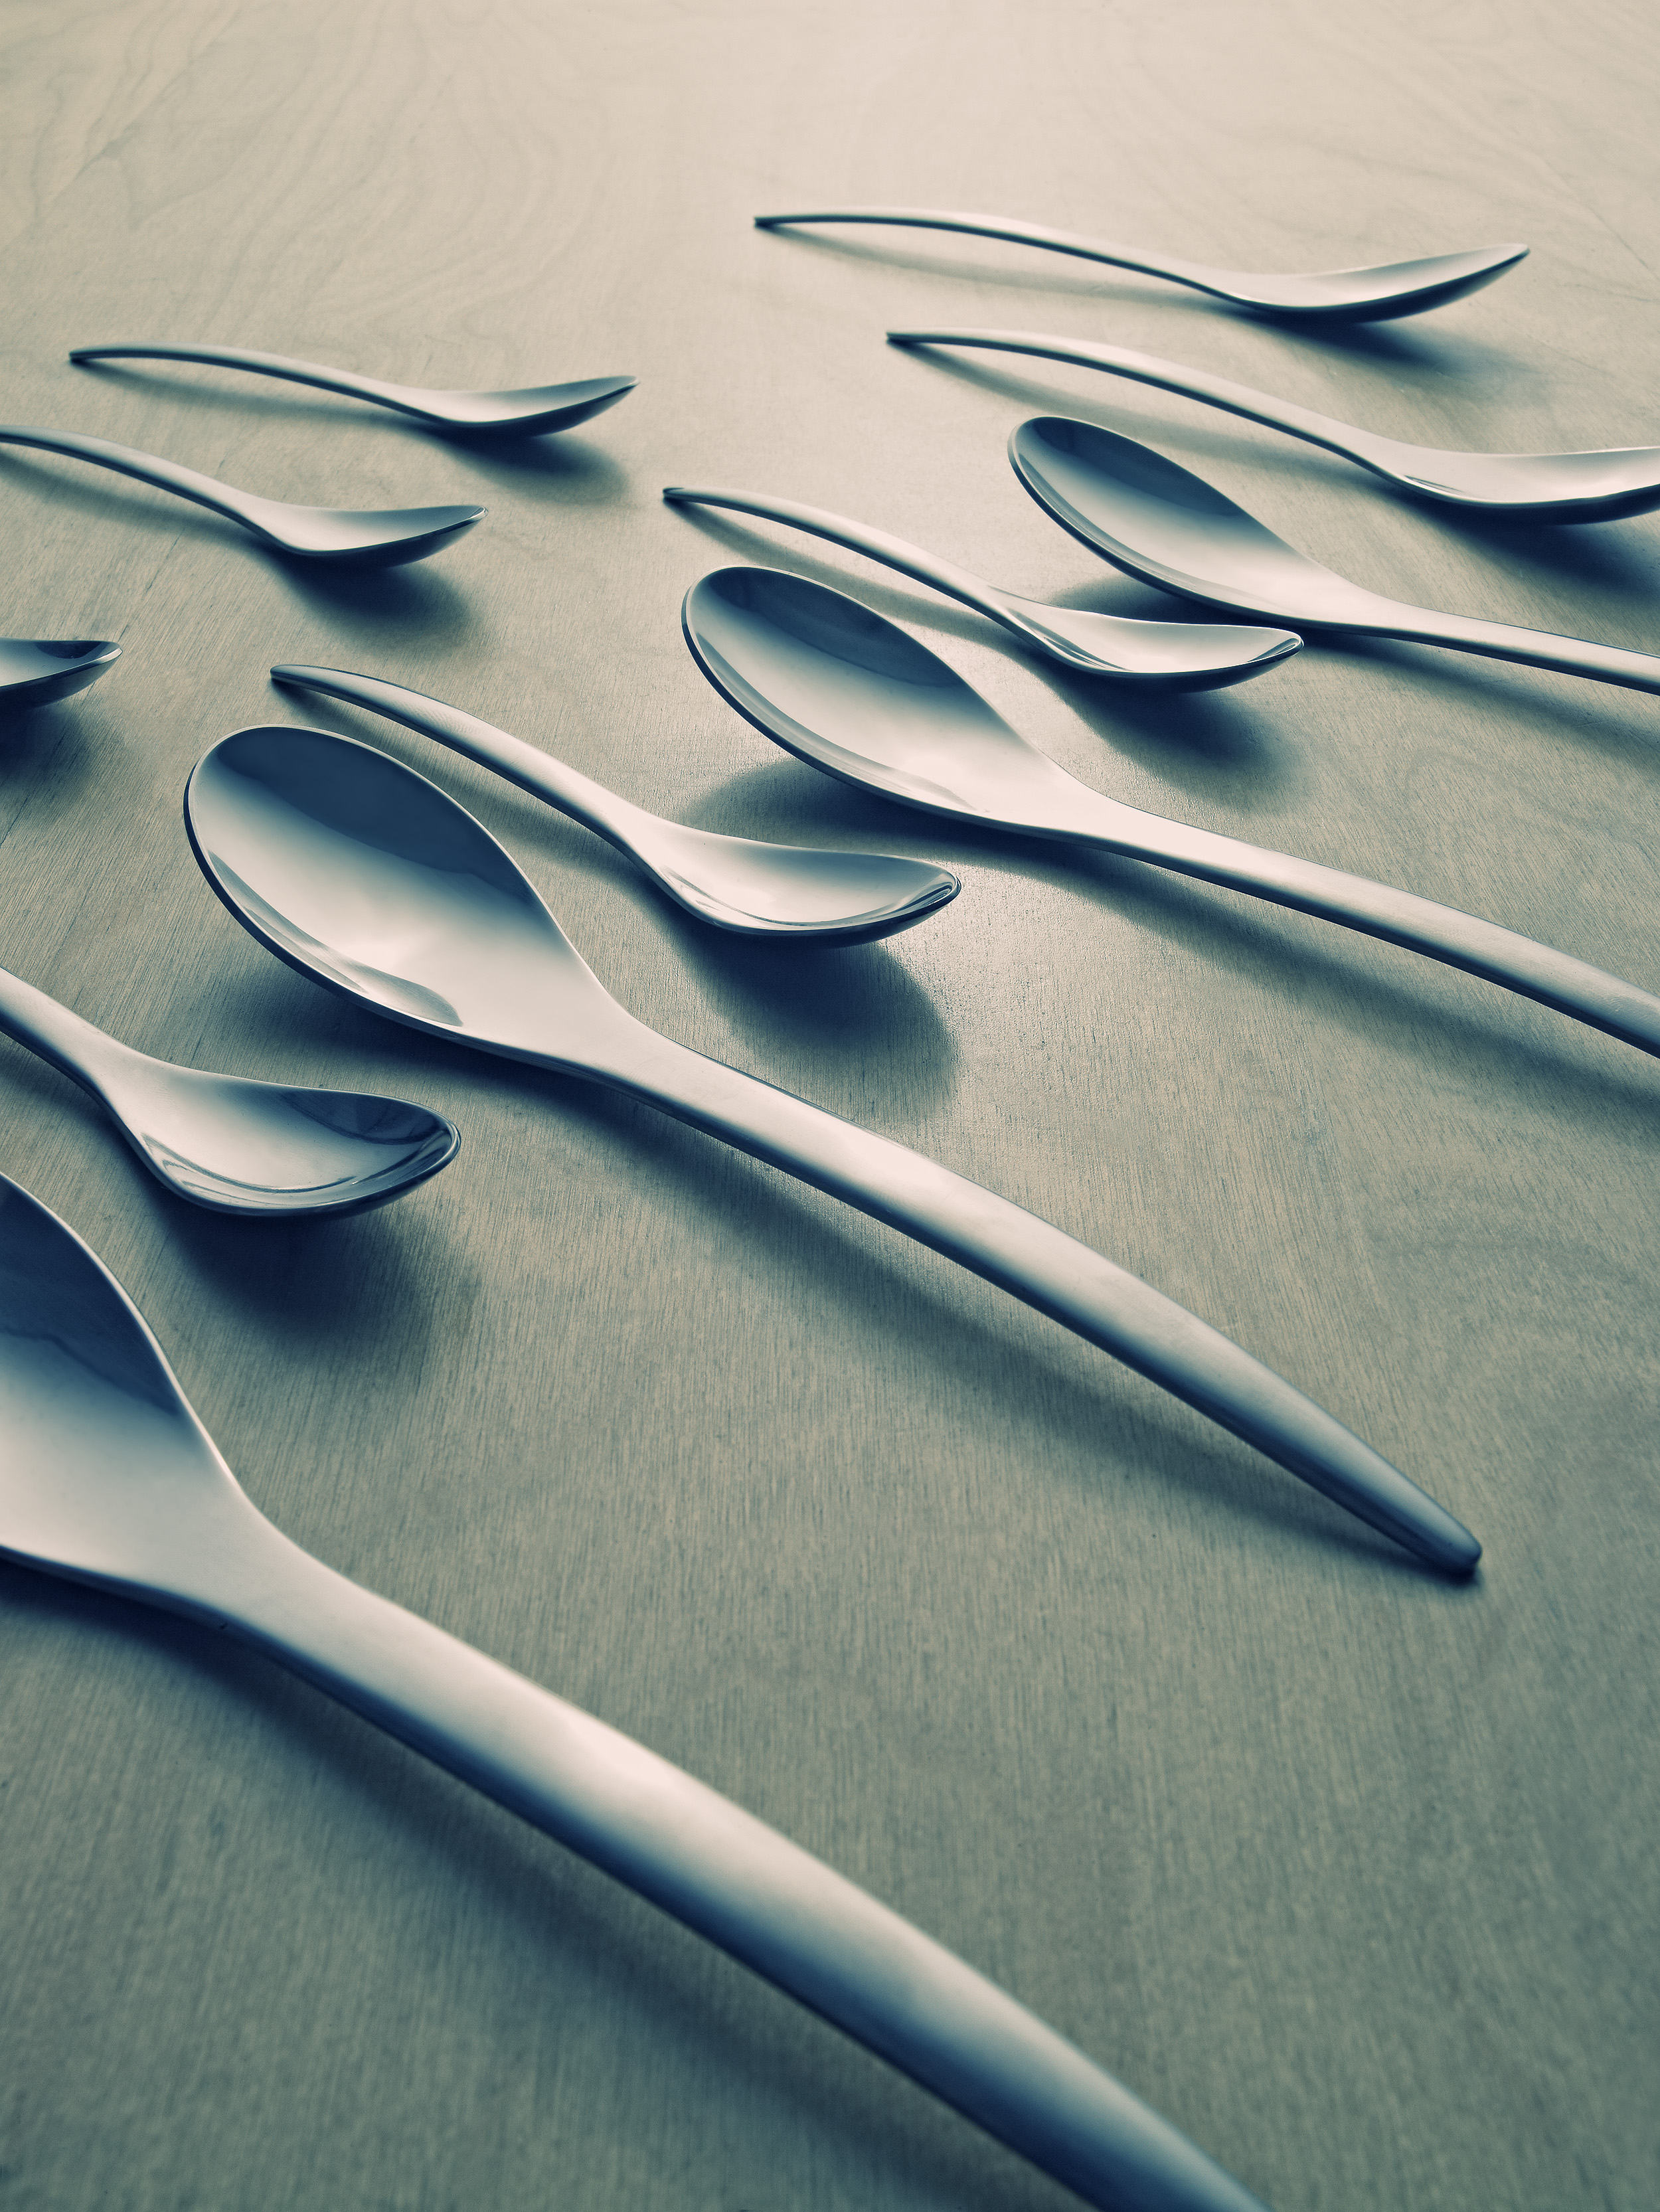  Spoons  